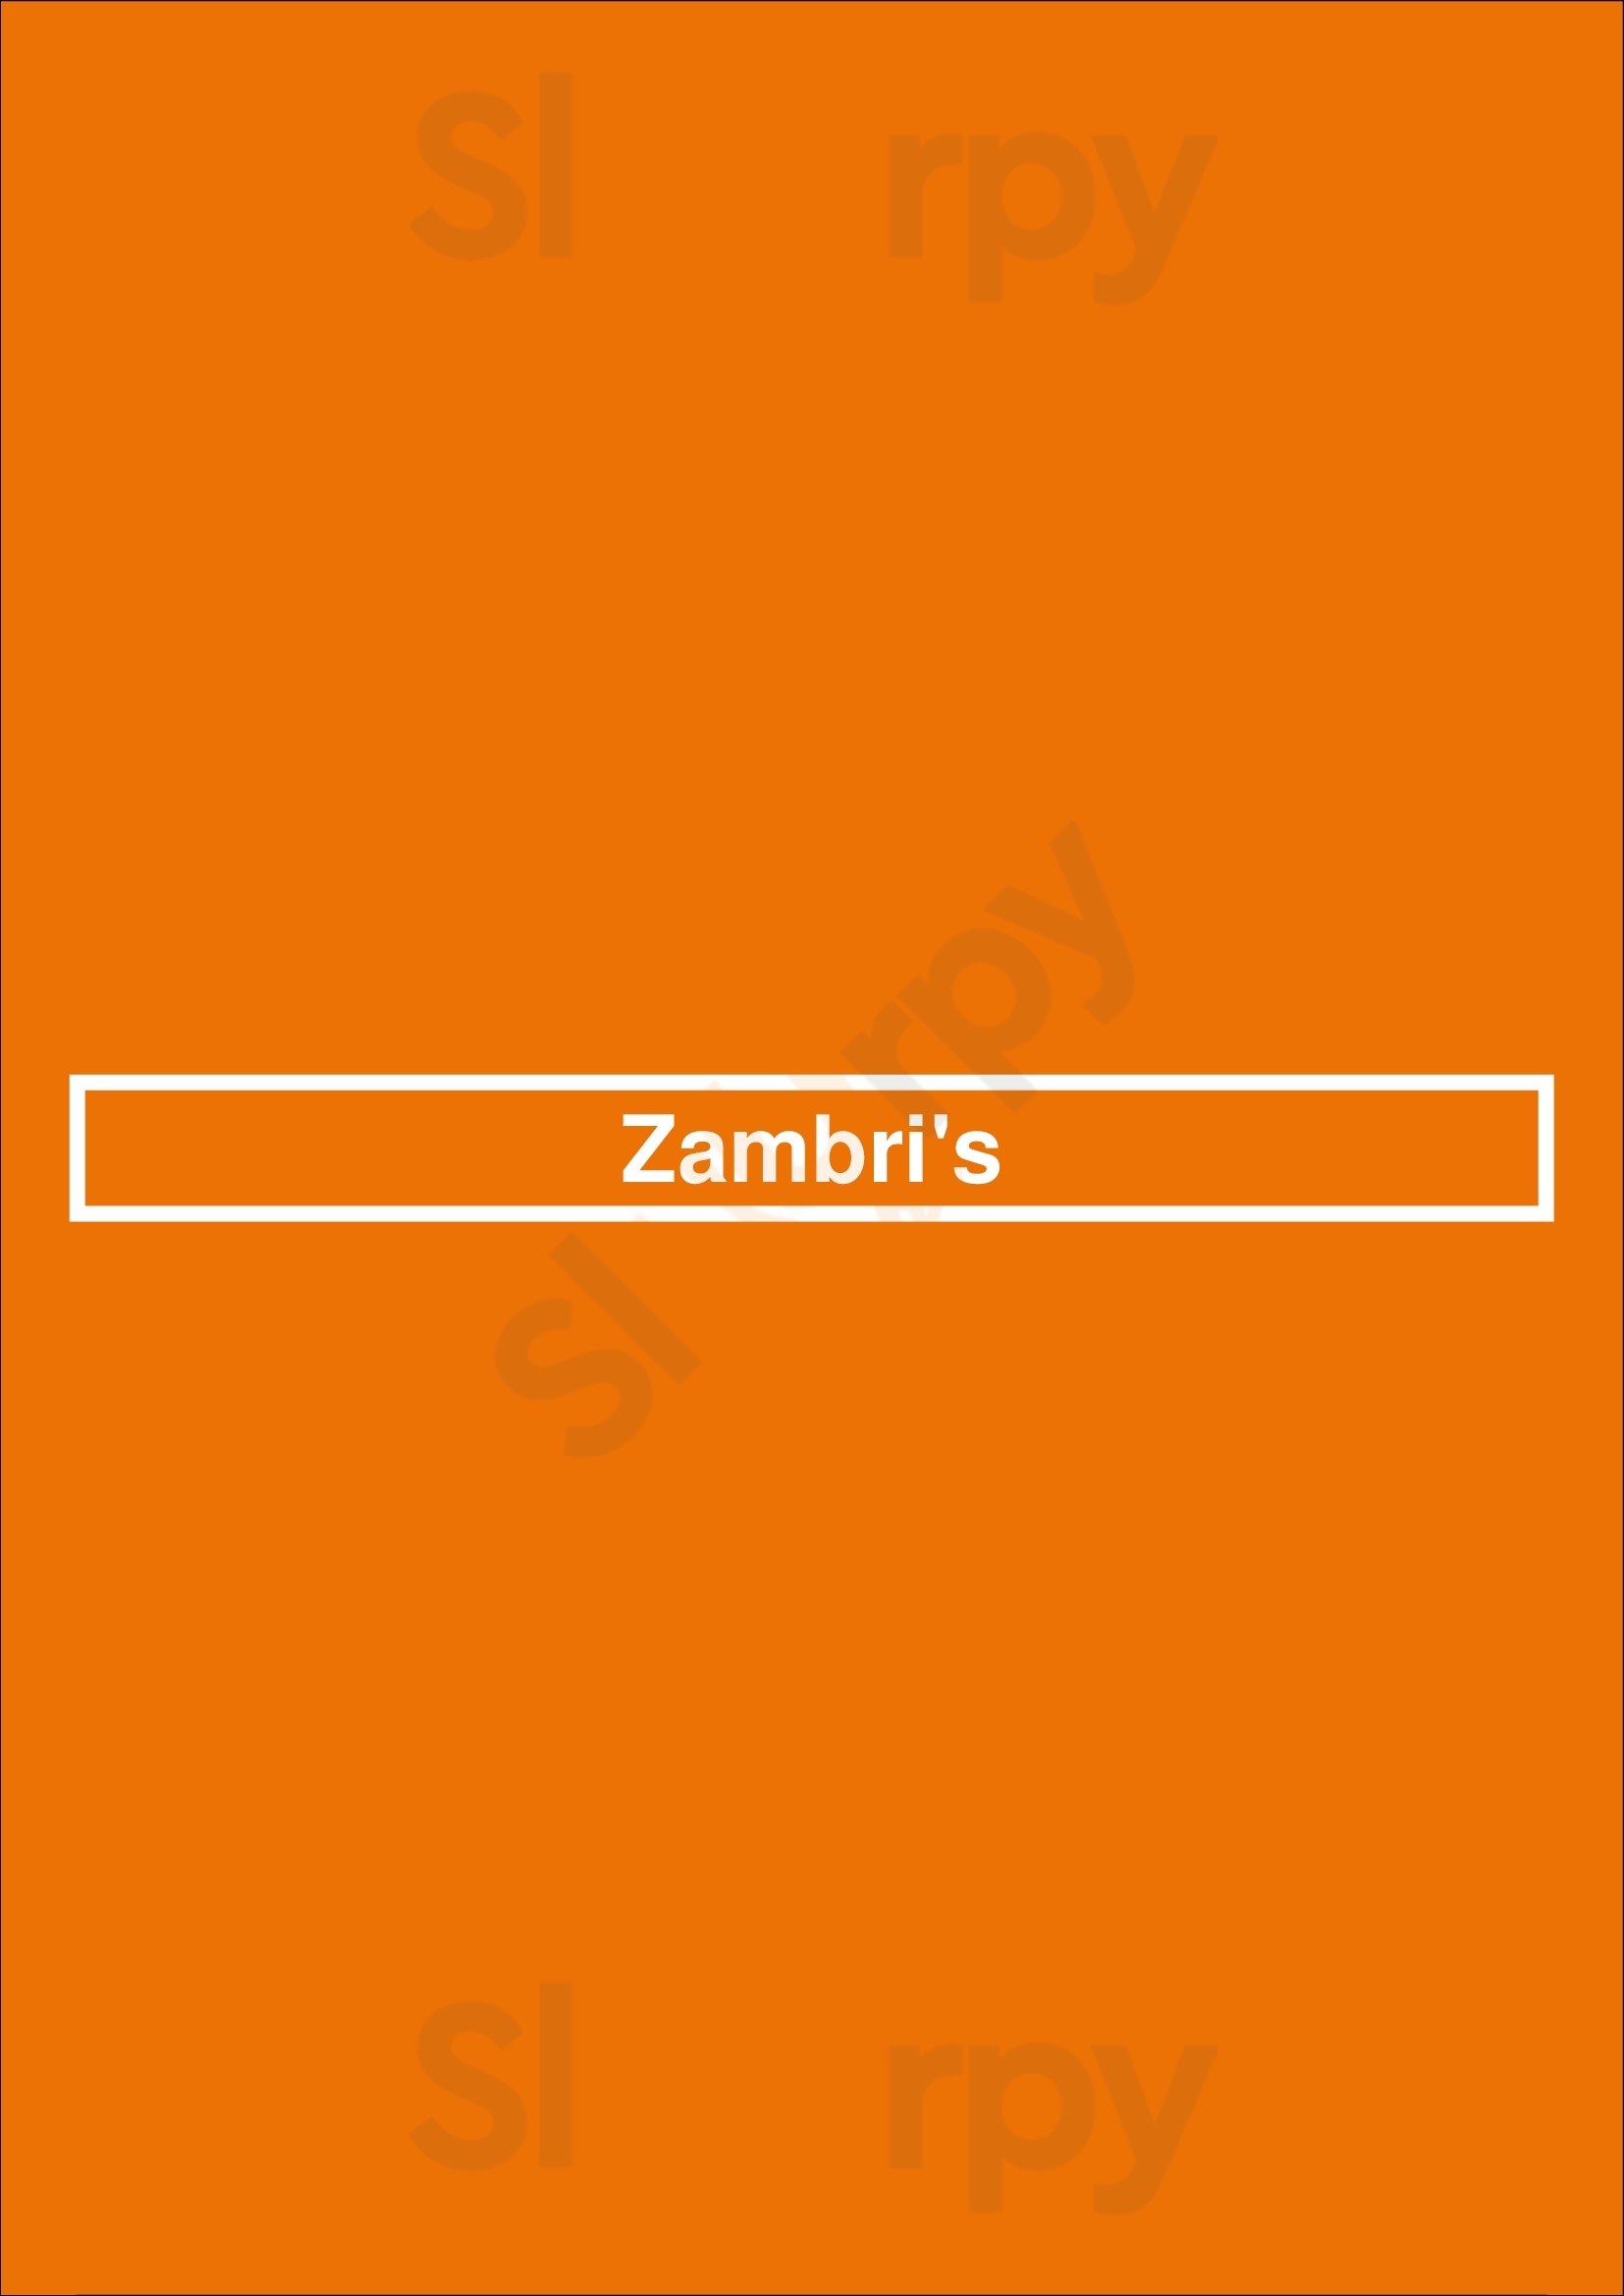 Zambri's Victoria Menu - 1